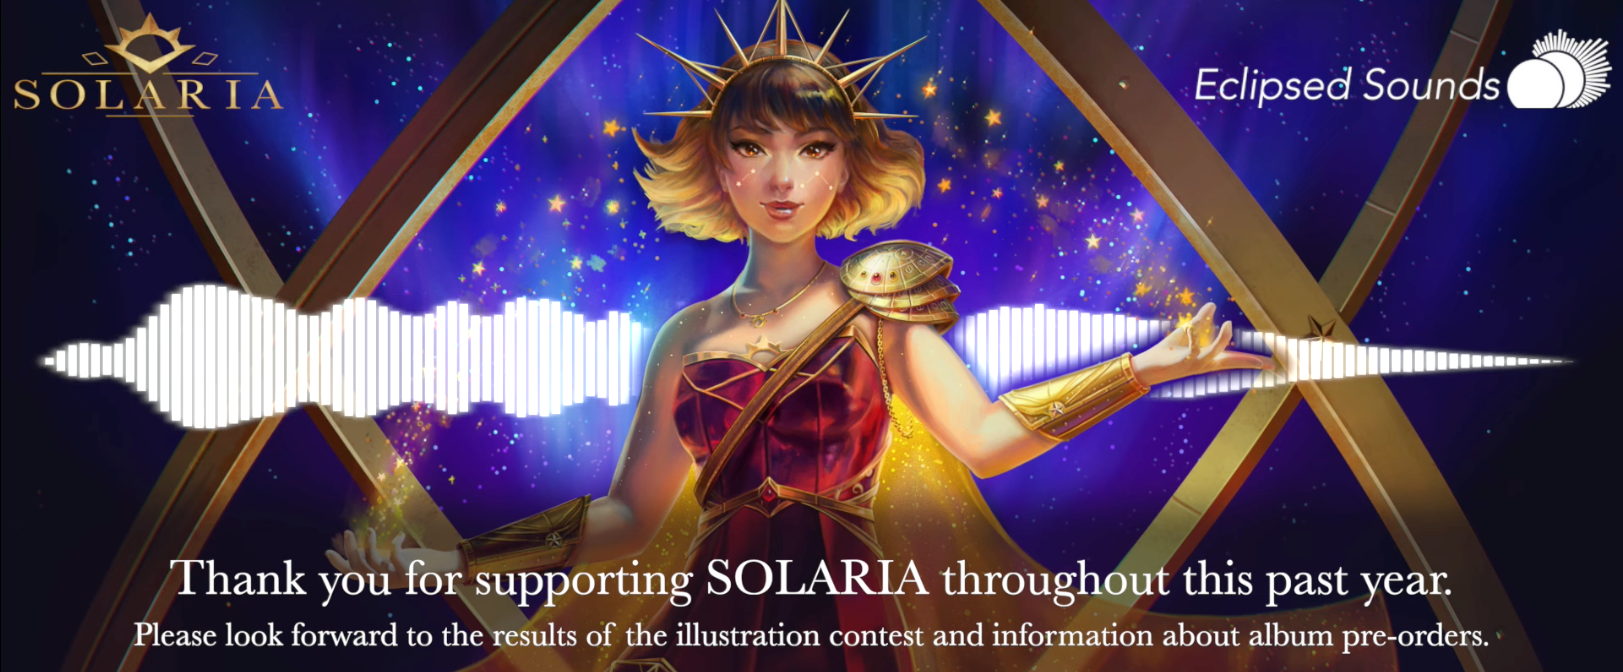 SOLARIA "SUNDIAL" Illustration Contest Results